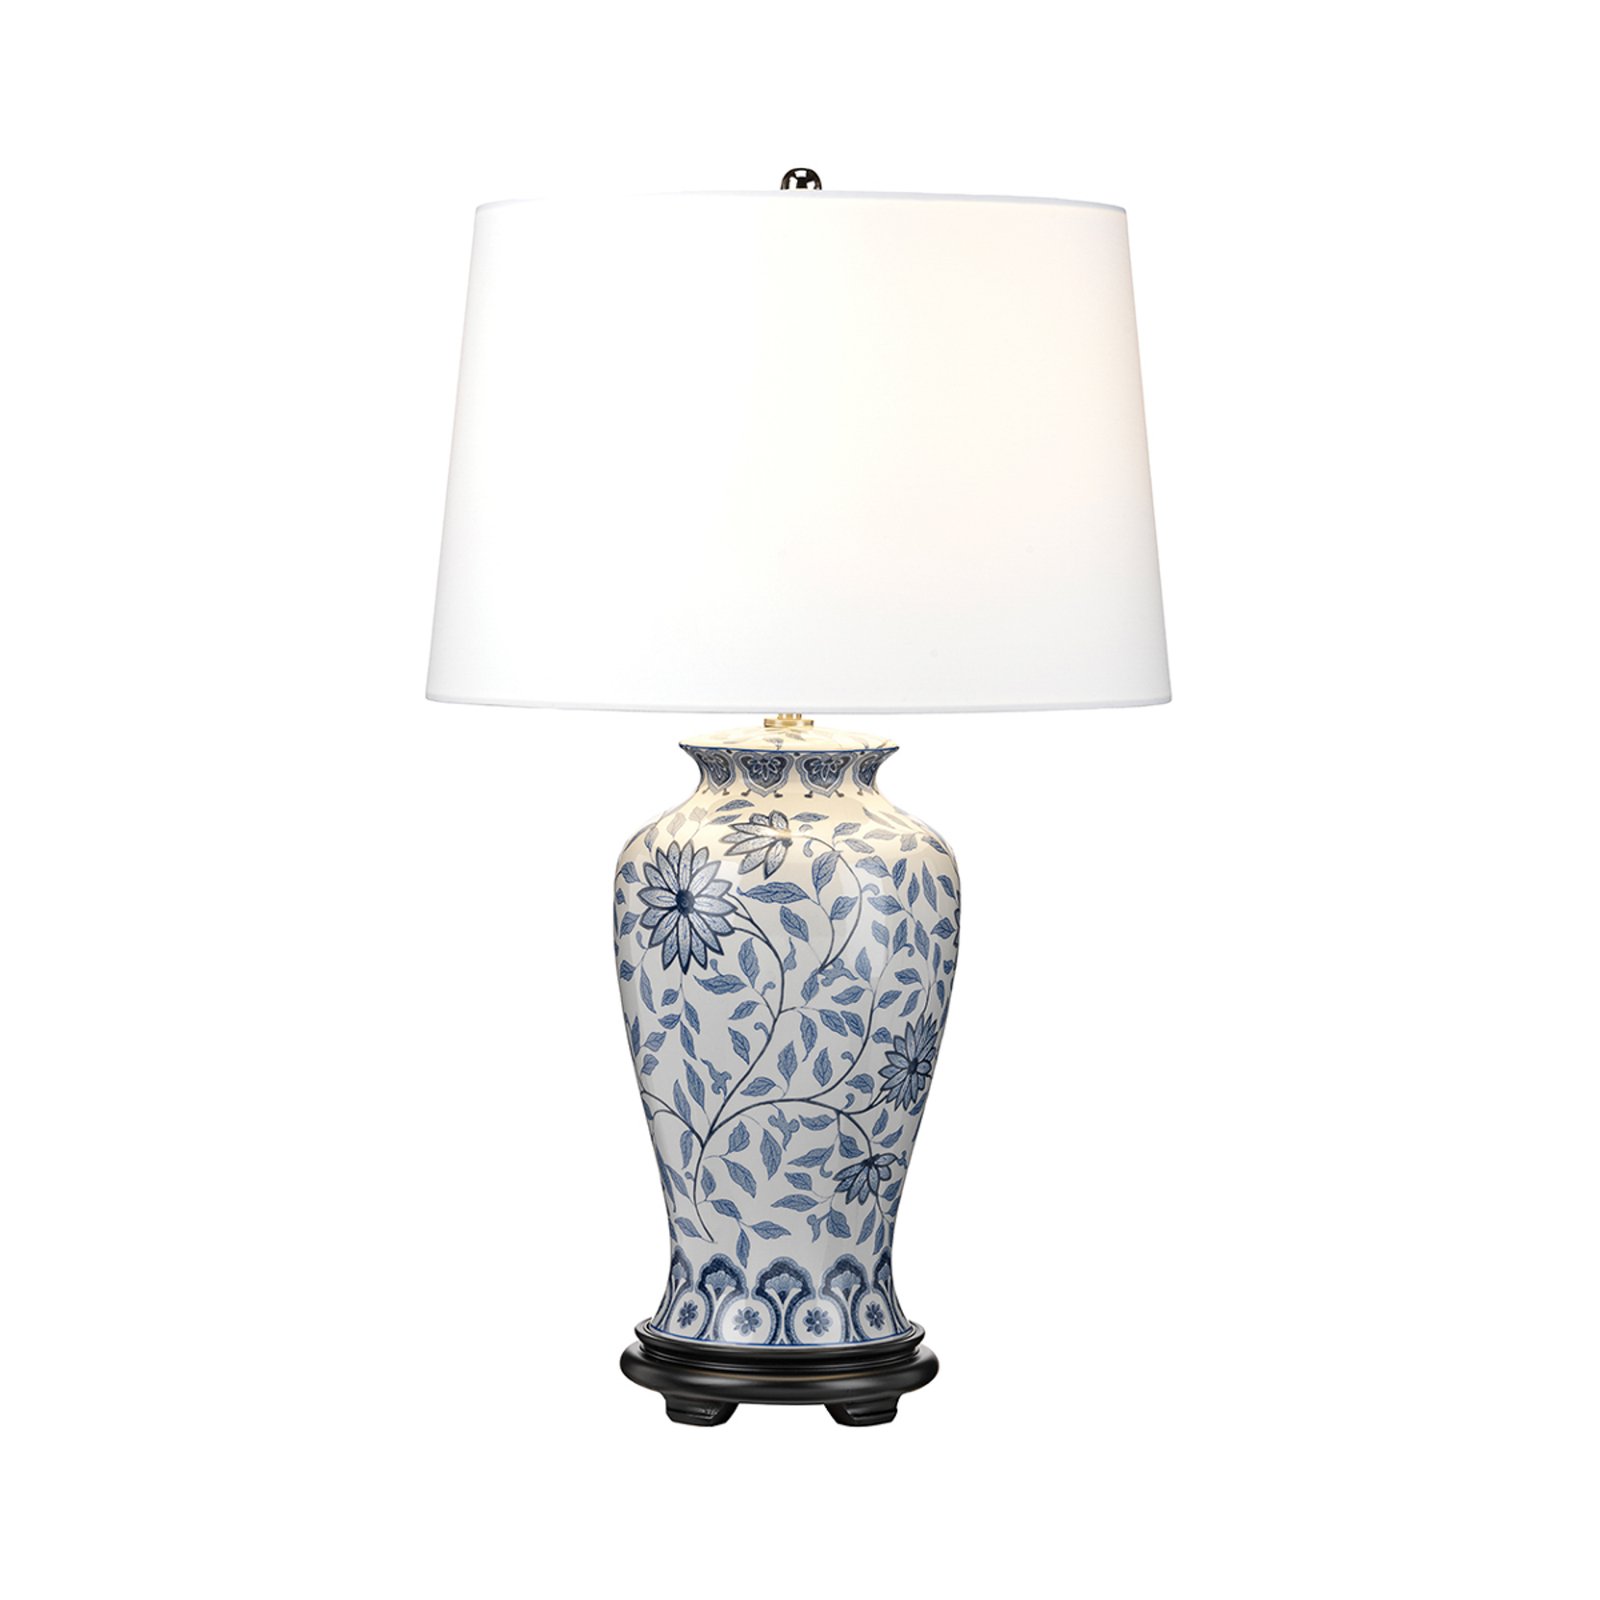 Ying table lamp 